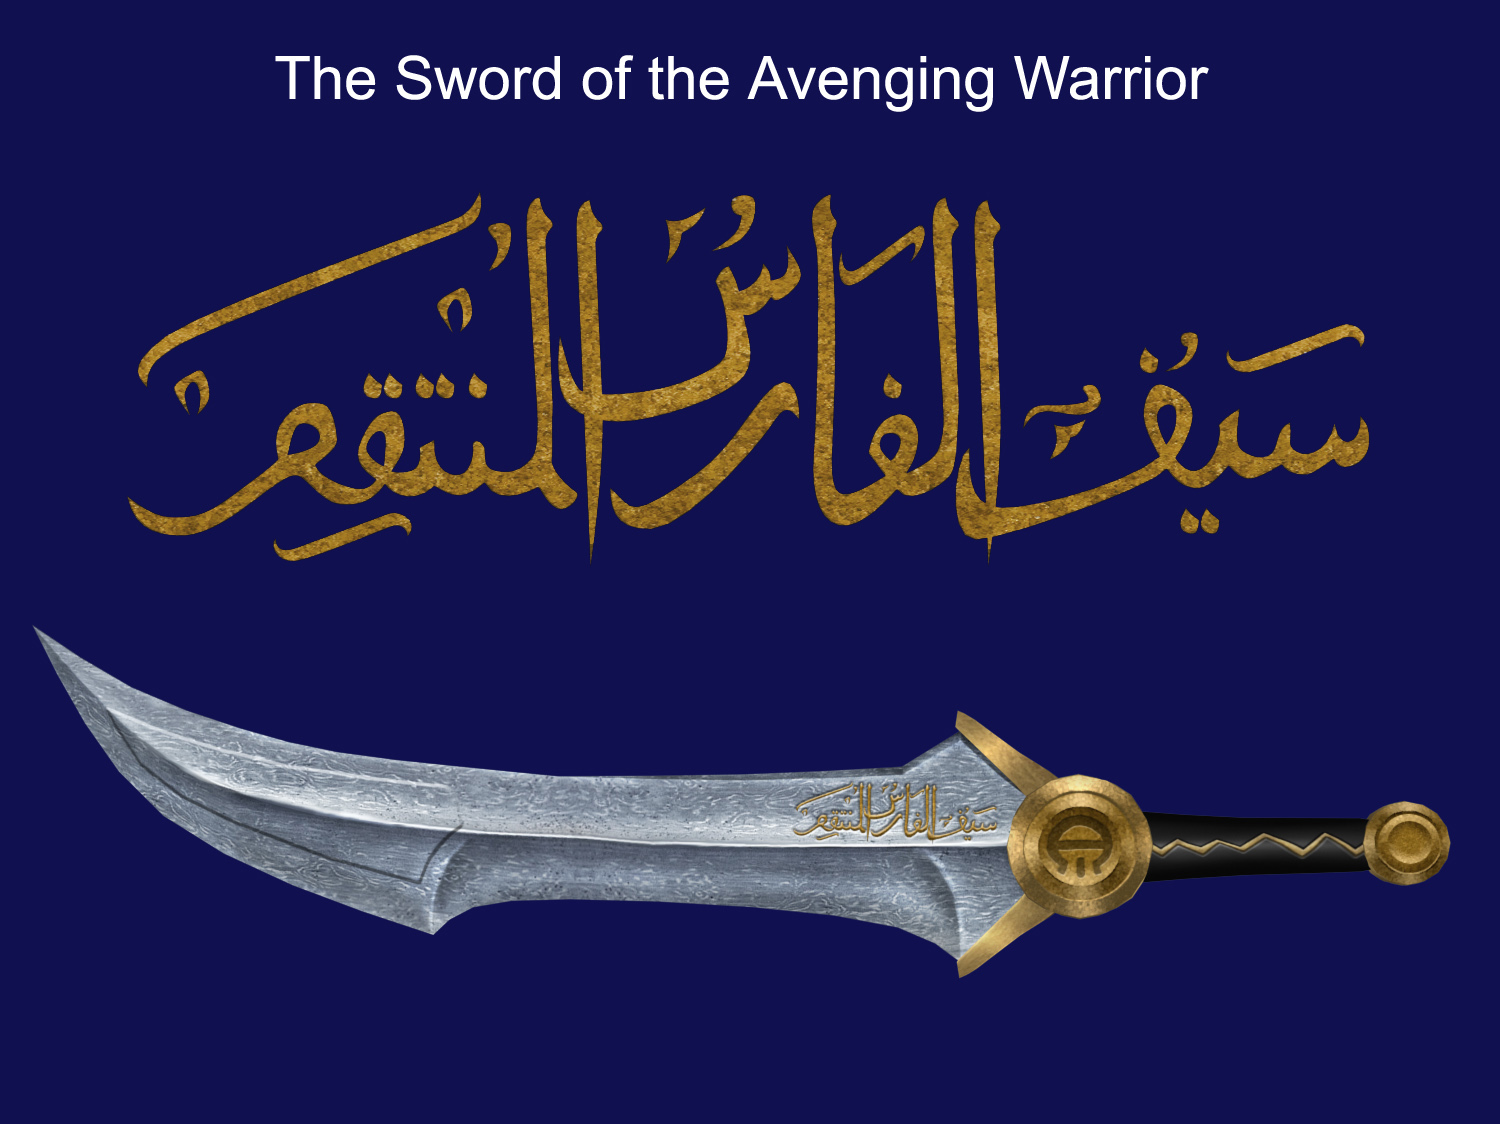 prince of persia water sword